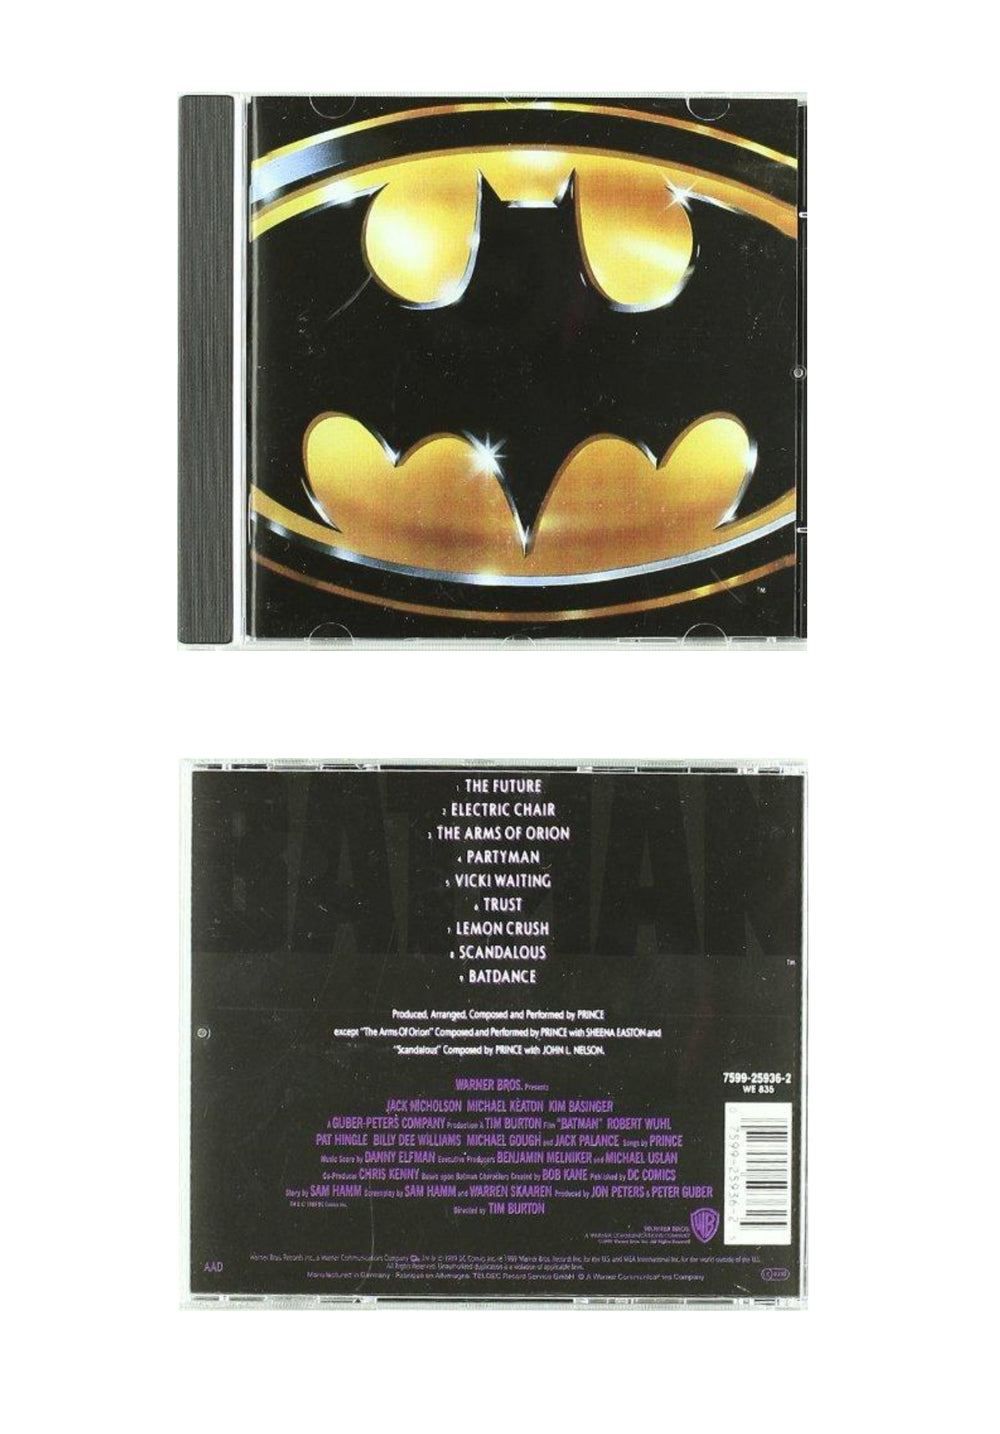 Prince – Batman™ (Motion Picture Soundtrack) CD Album Europe Preloved: 1989